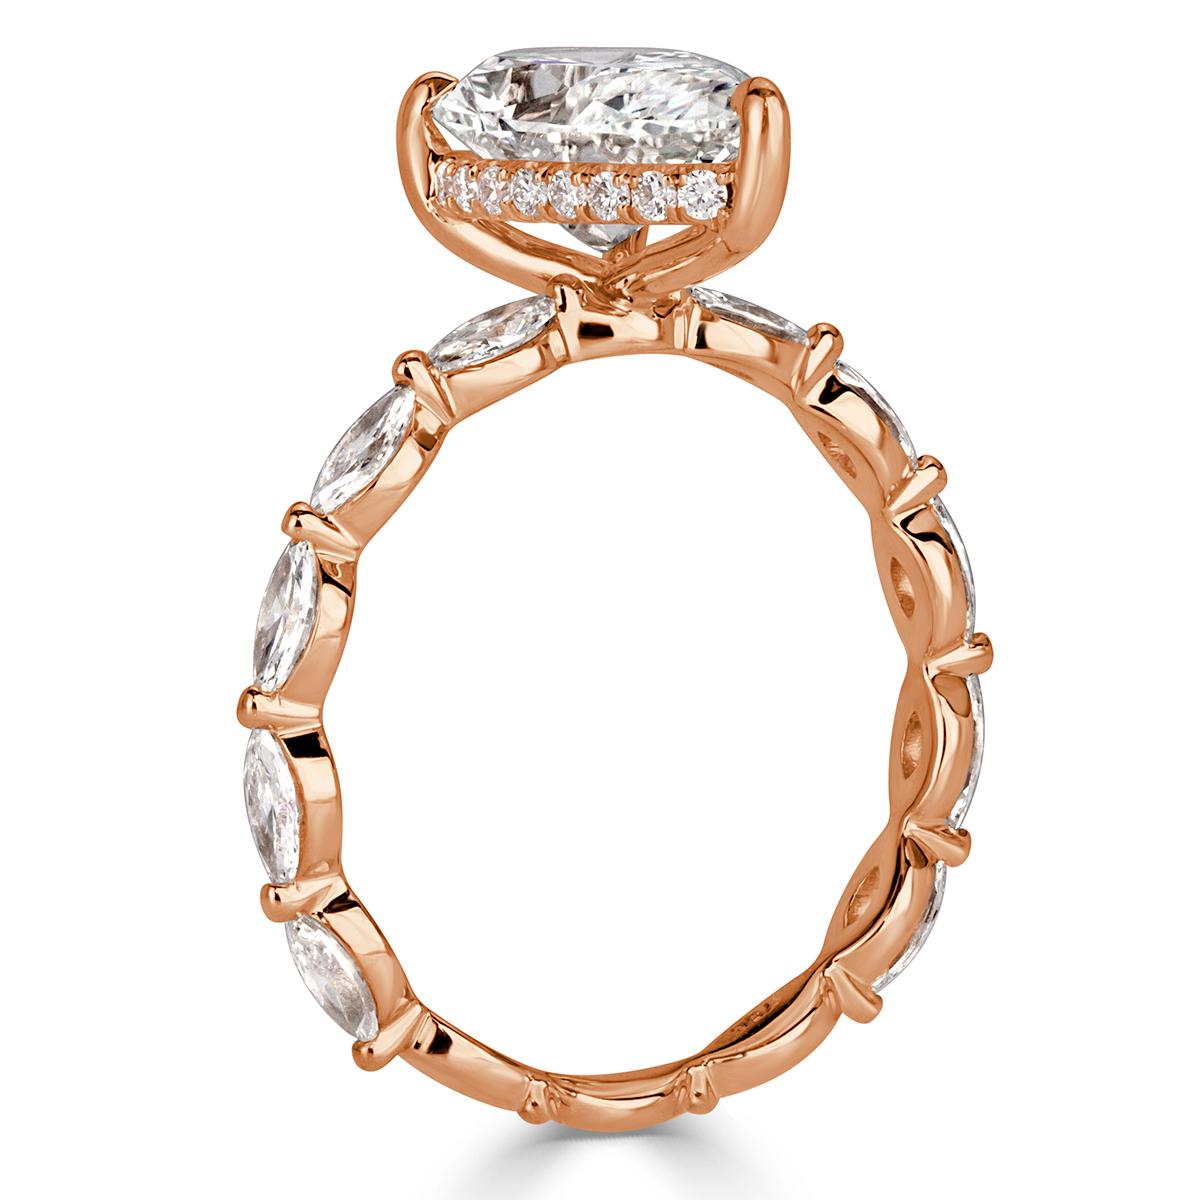 Women's or Men's Mark Broumand 3.04 Carat Pear Shaped Diamond Engagement Ring